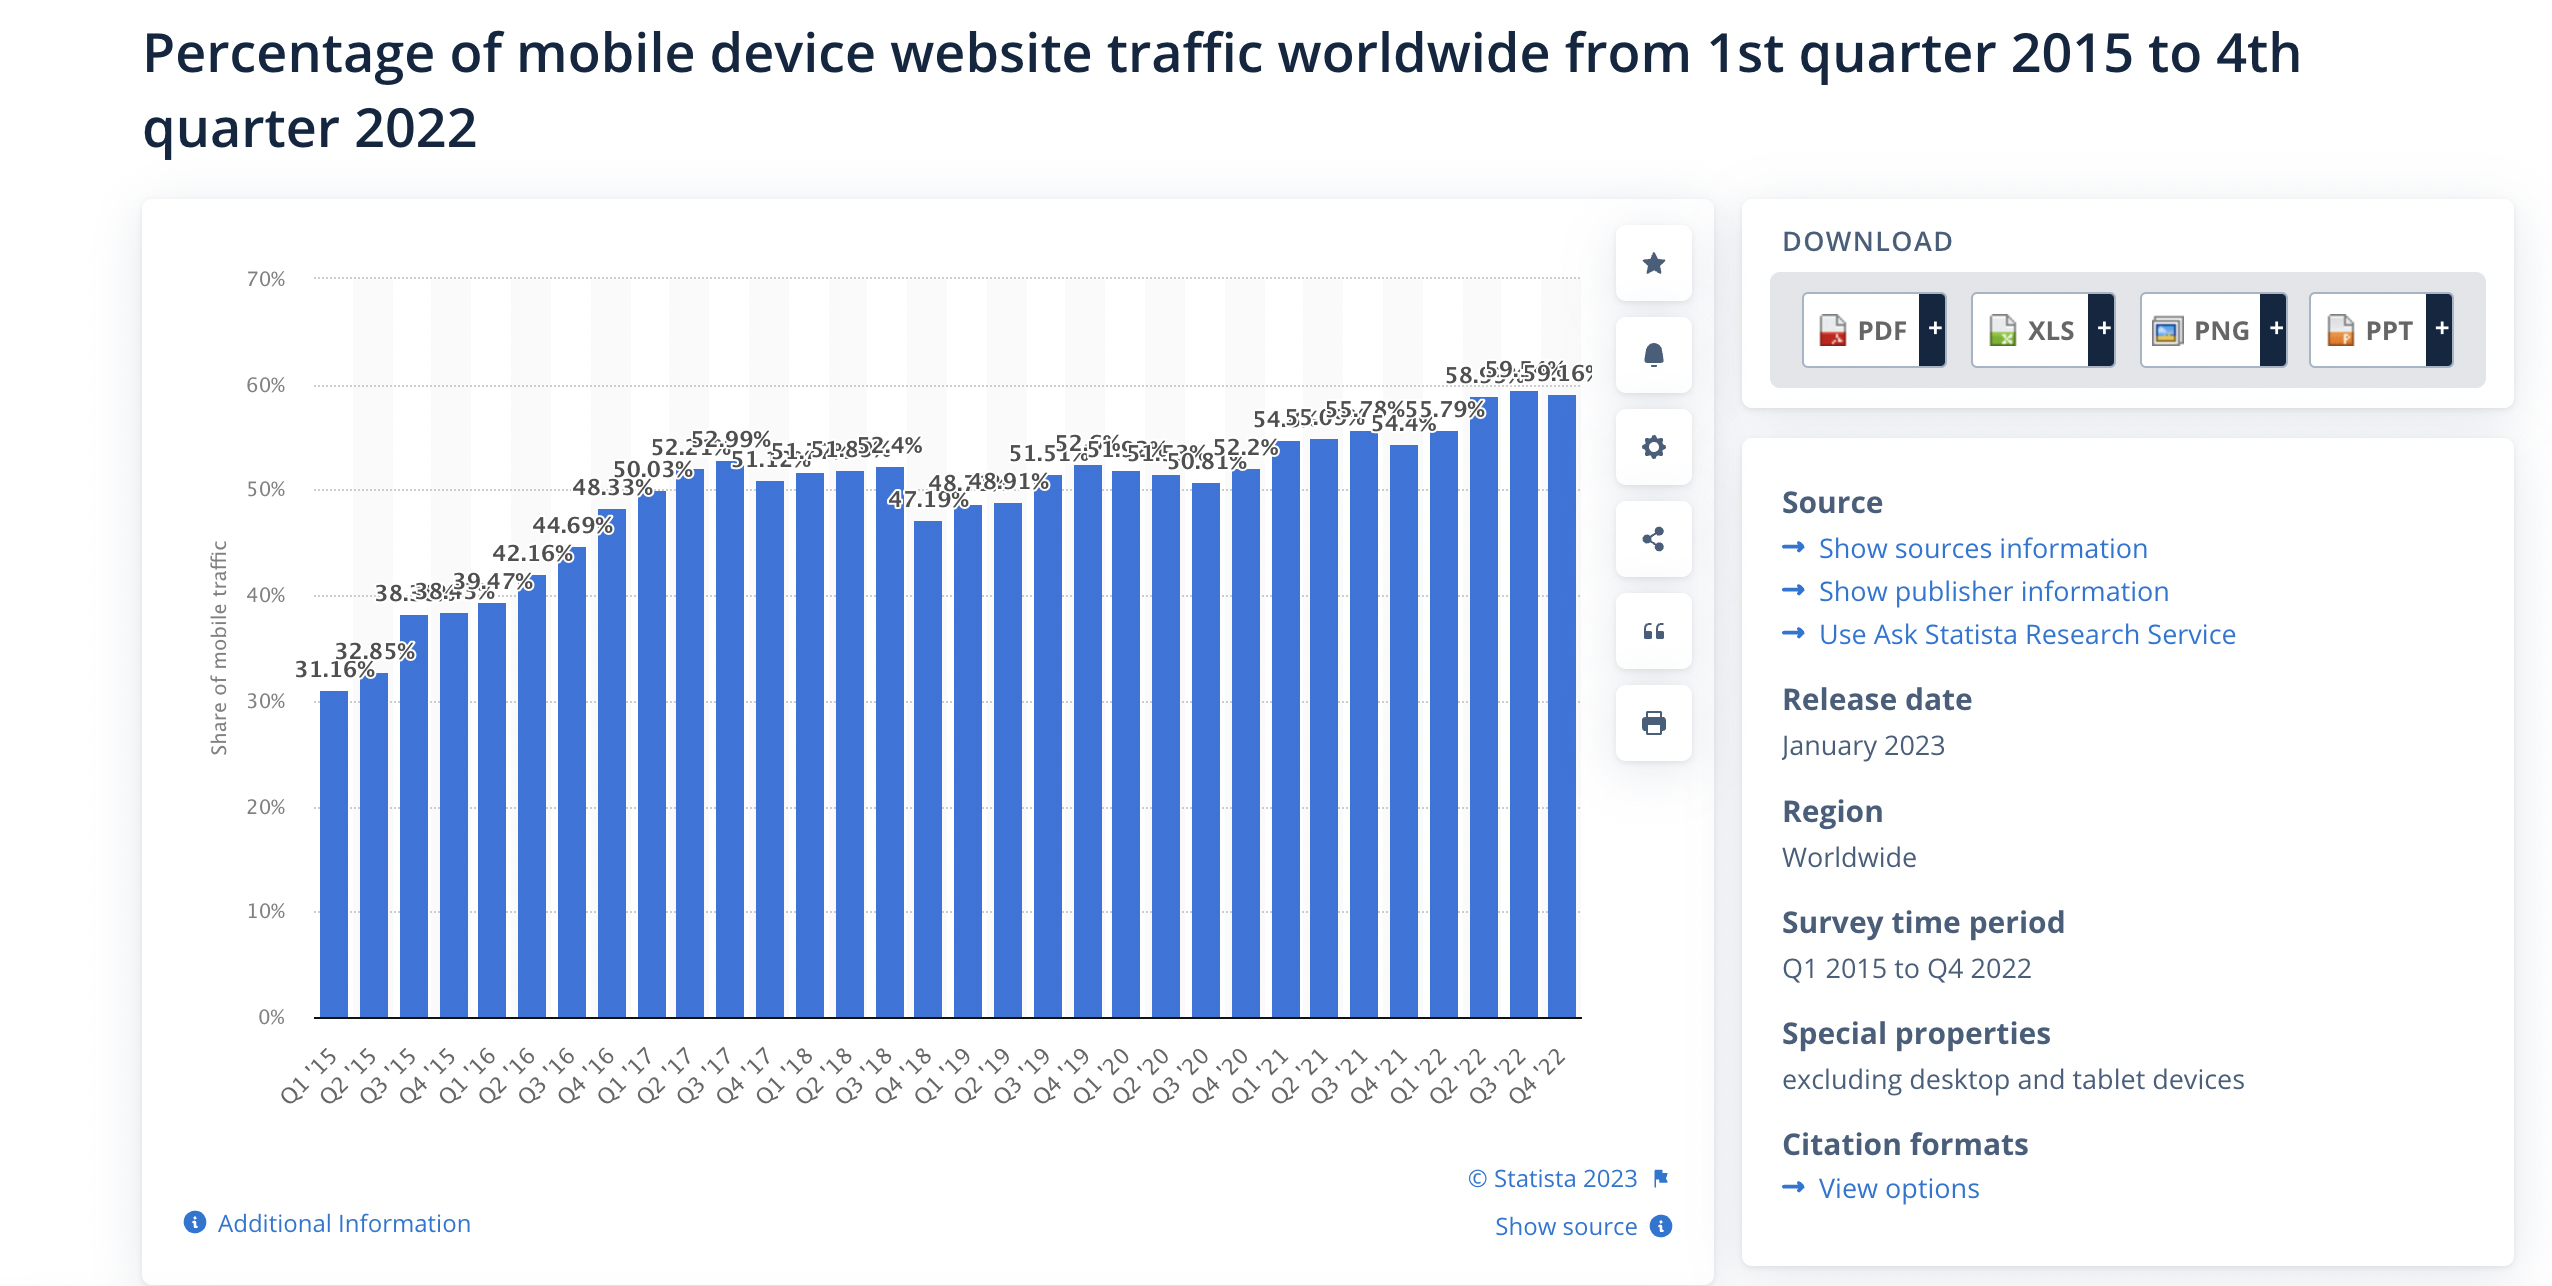 grafico-percentuali-traffico-web-globale